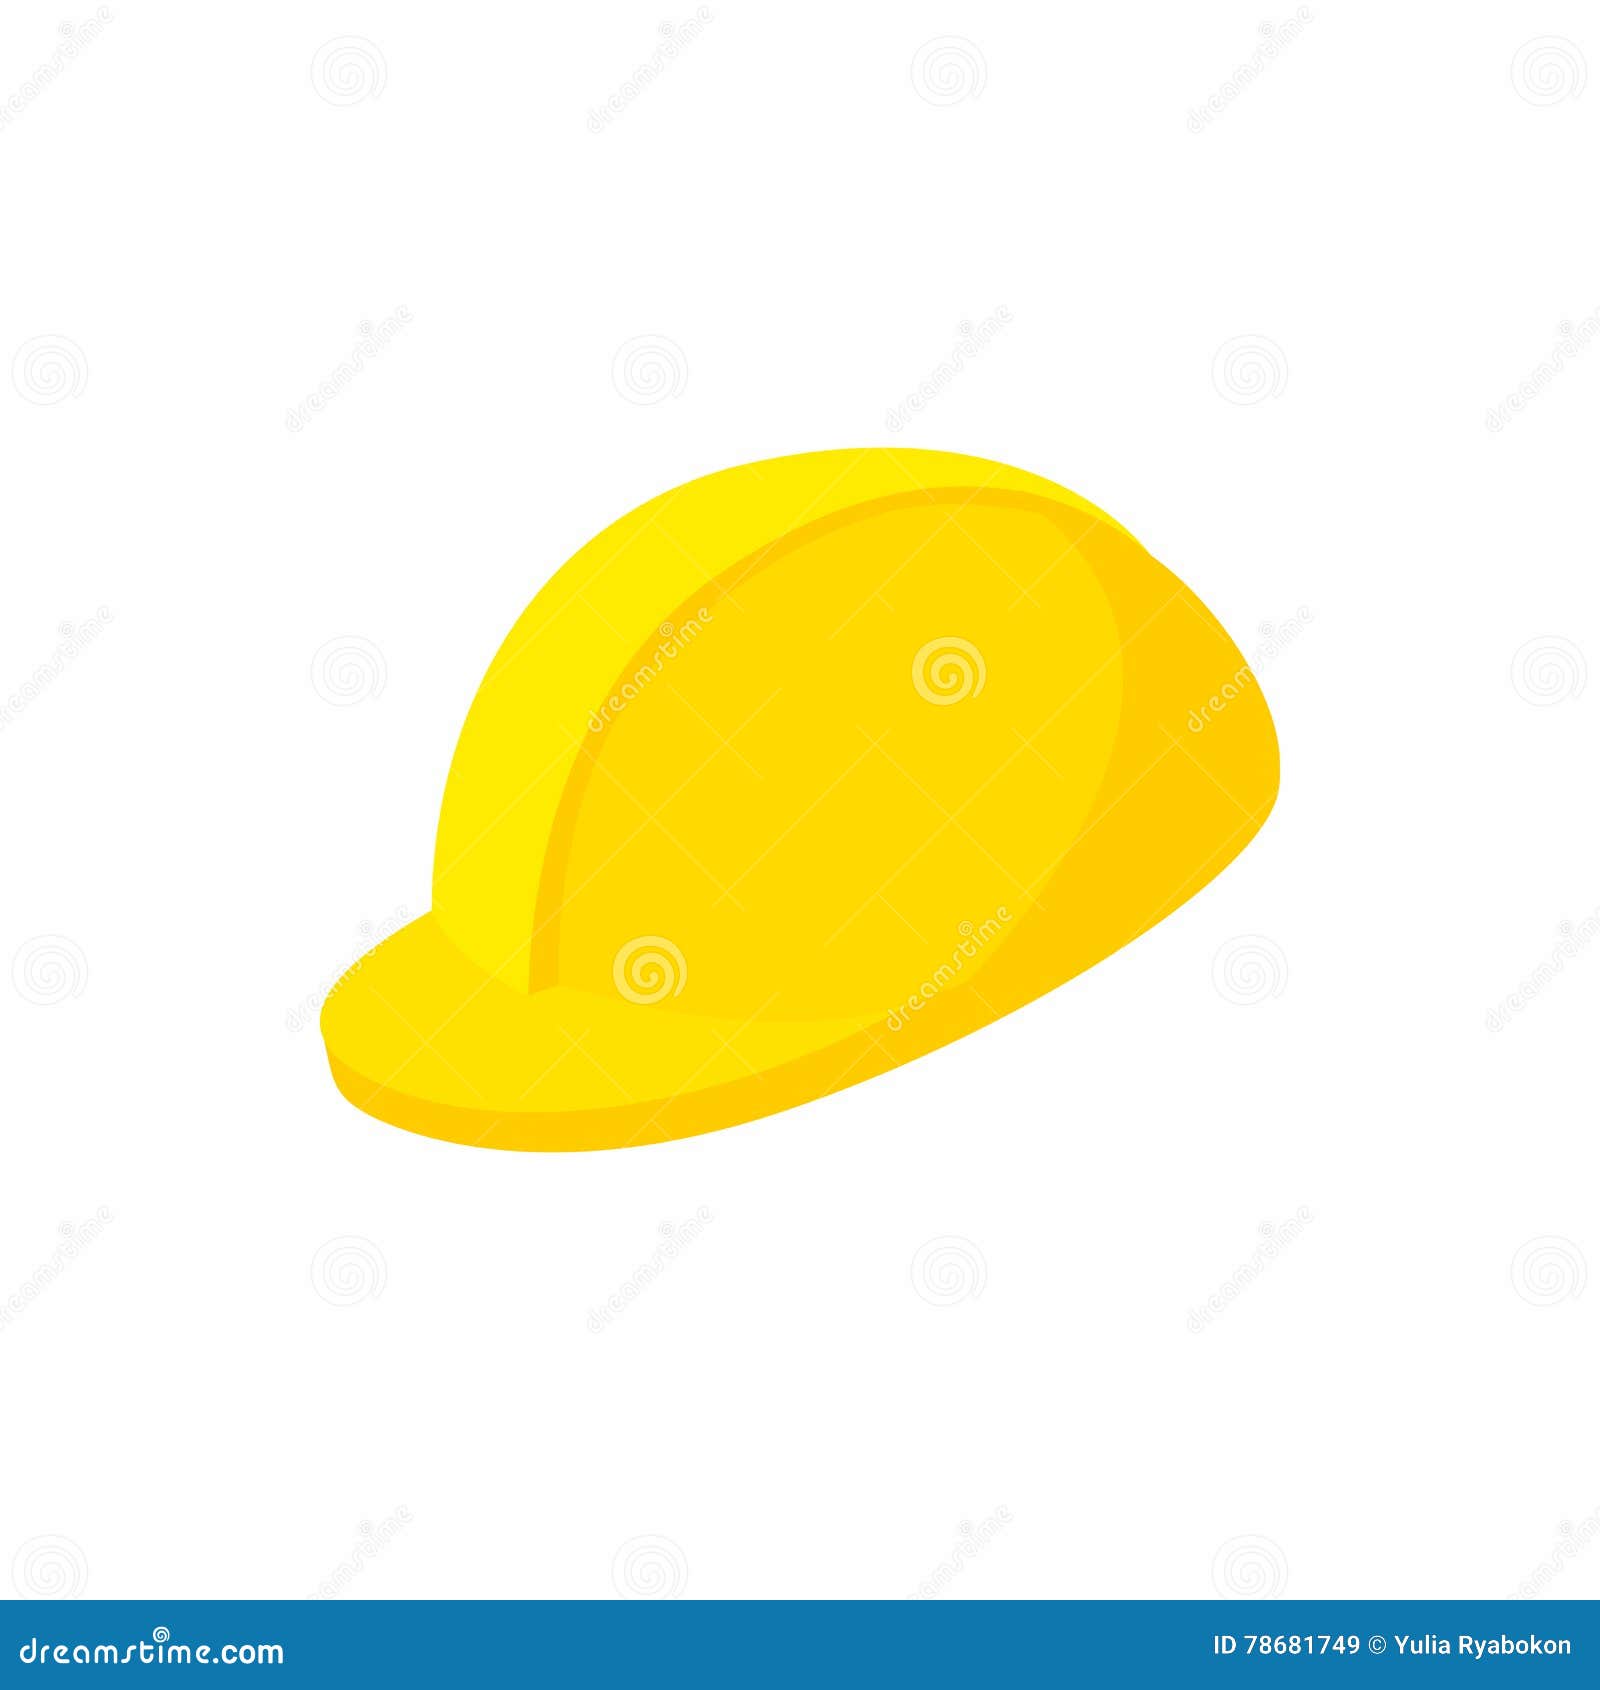 yellow hardhat icon, cartoon style